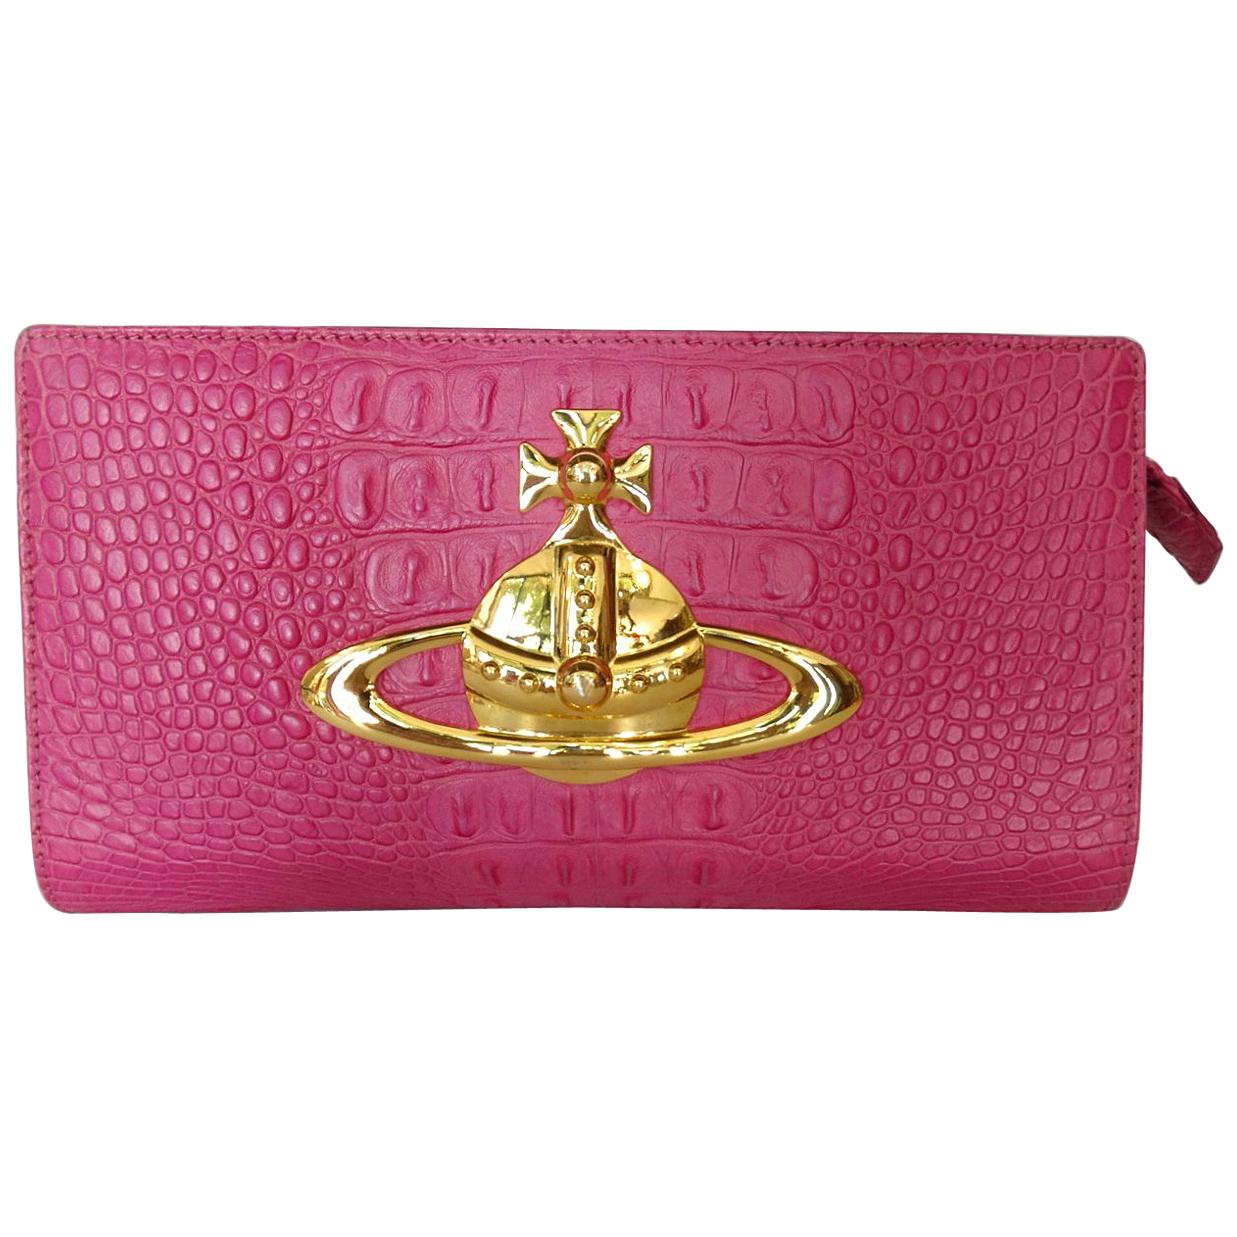 Vivienne Westwood Classic Pink Orb Clutch Bag 